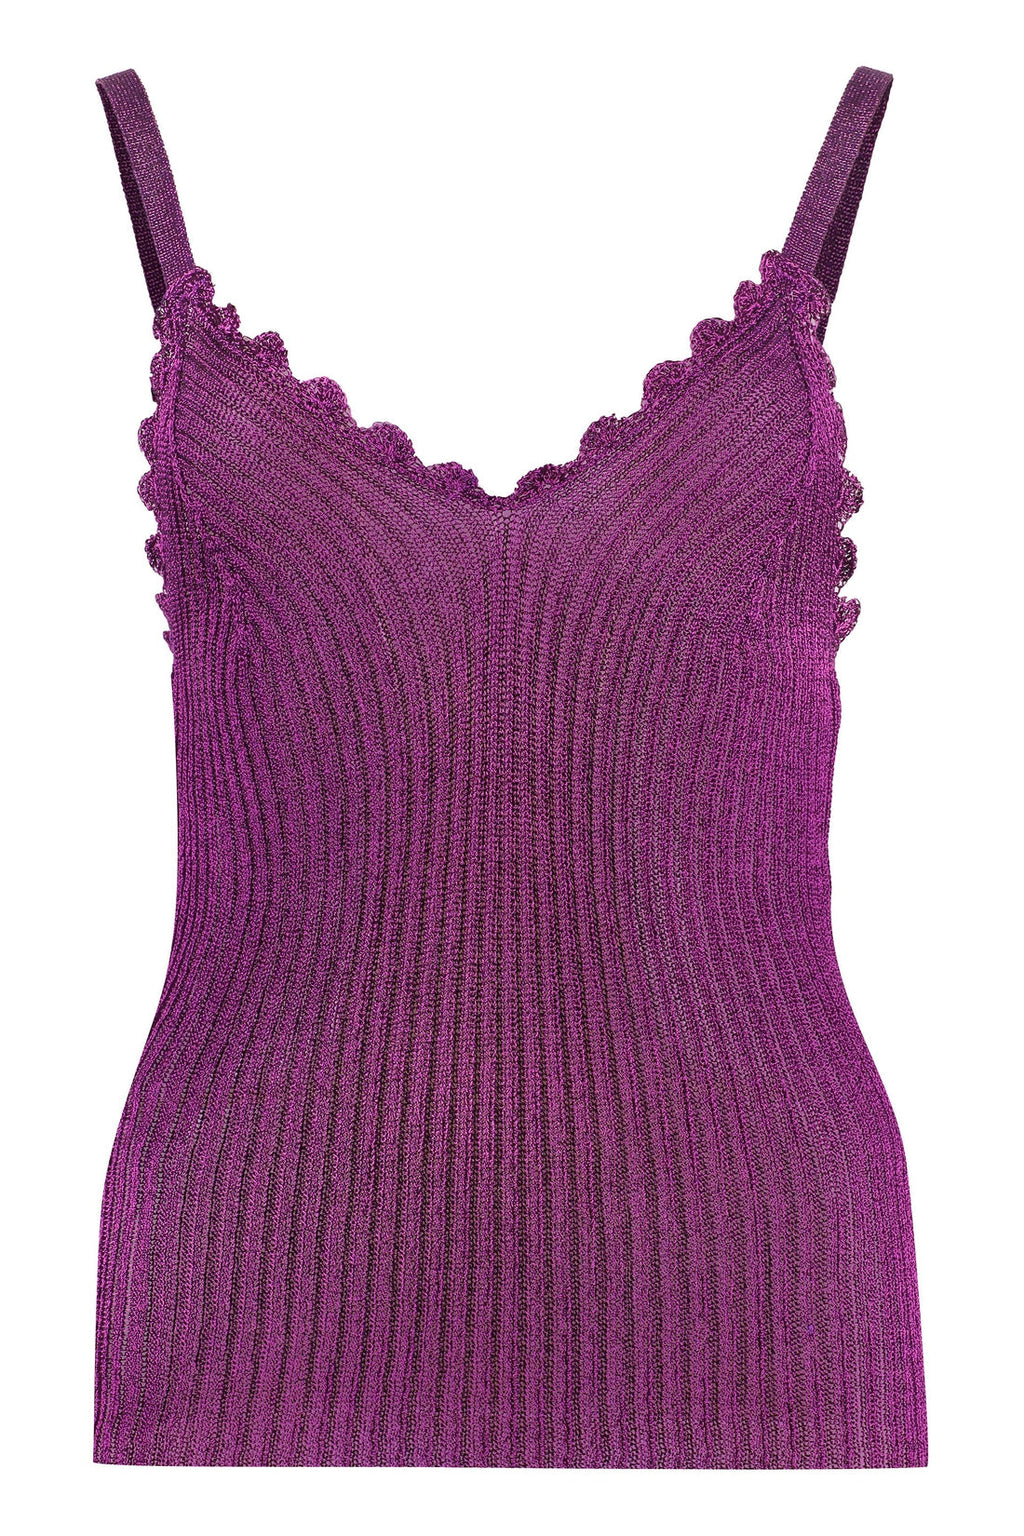 GANNI-OUTLET-SALE-Knitted lurex top-ARCHIVIST